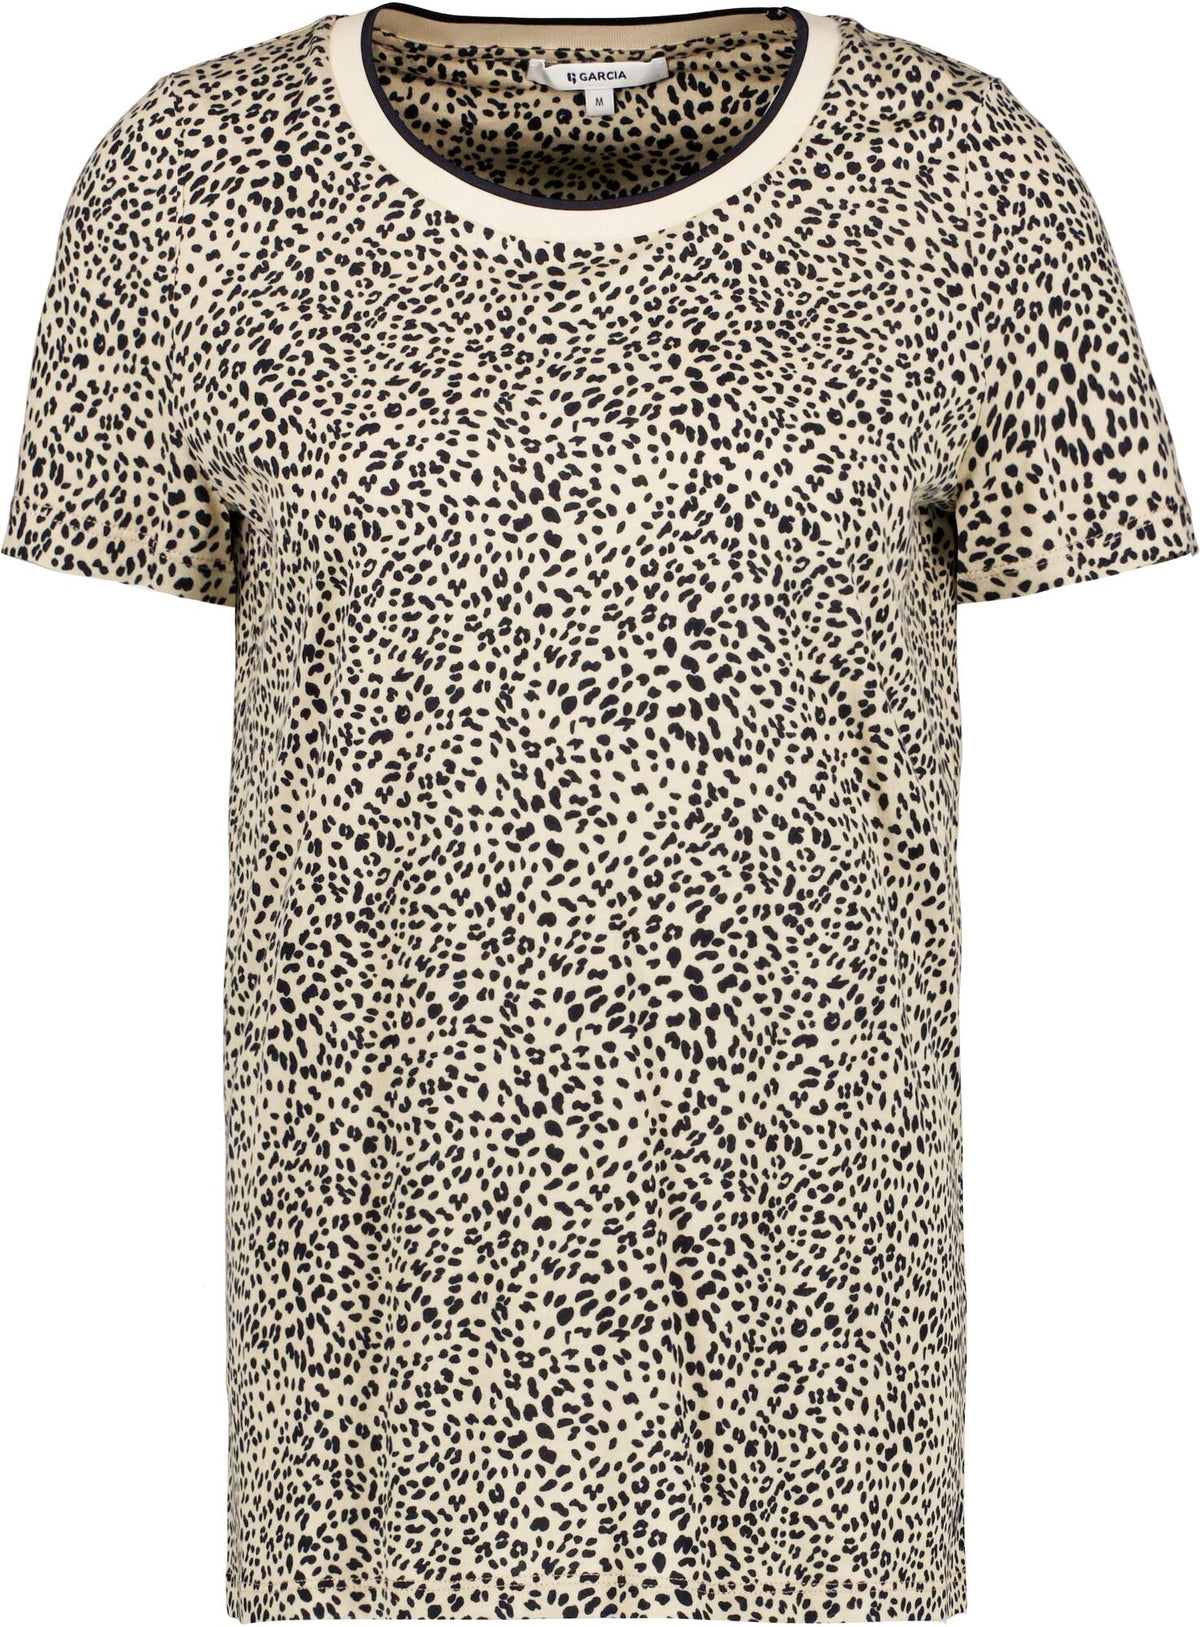 Garcia Beige Leopard Print T-Shirt